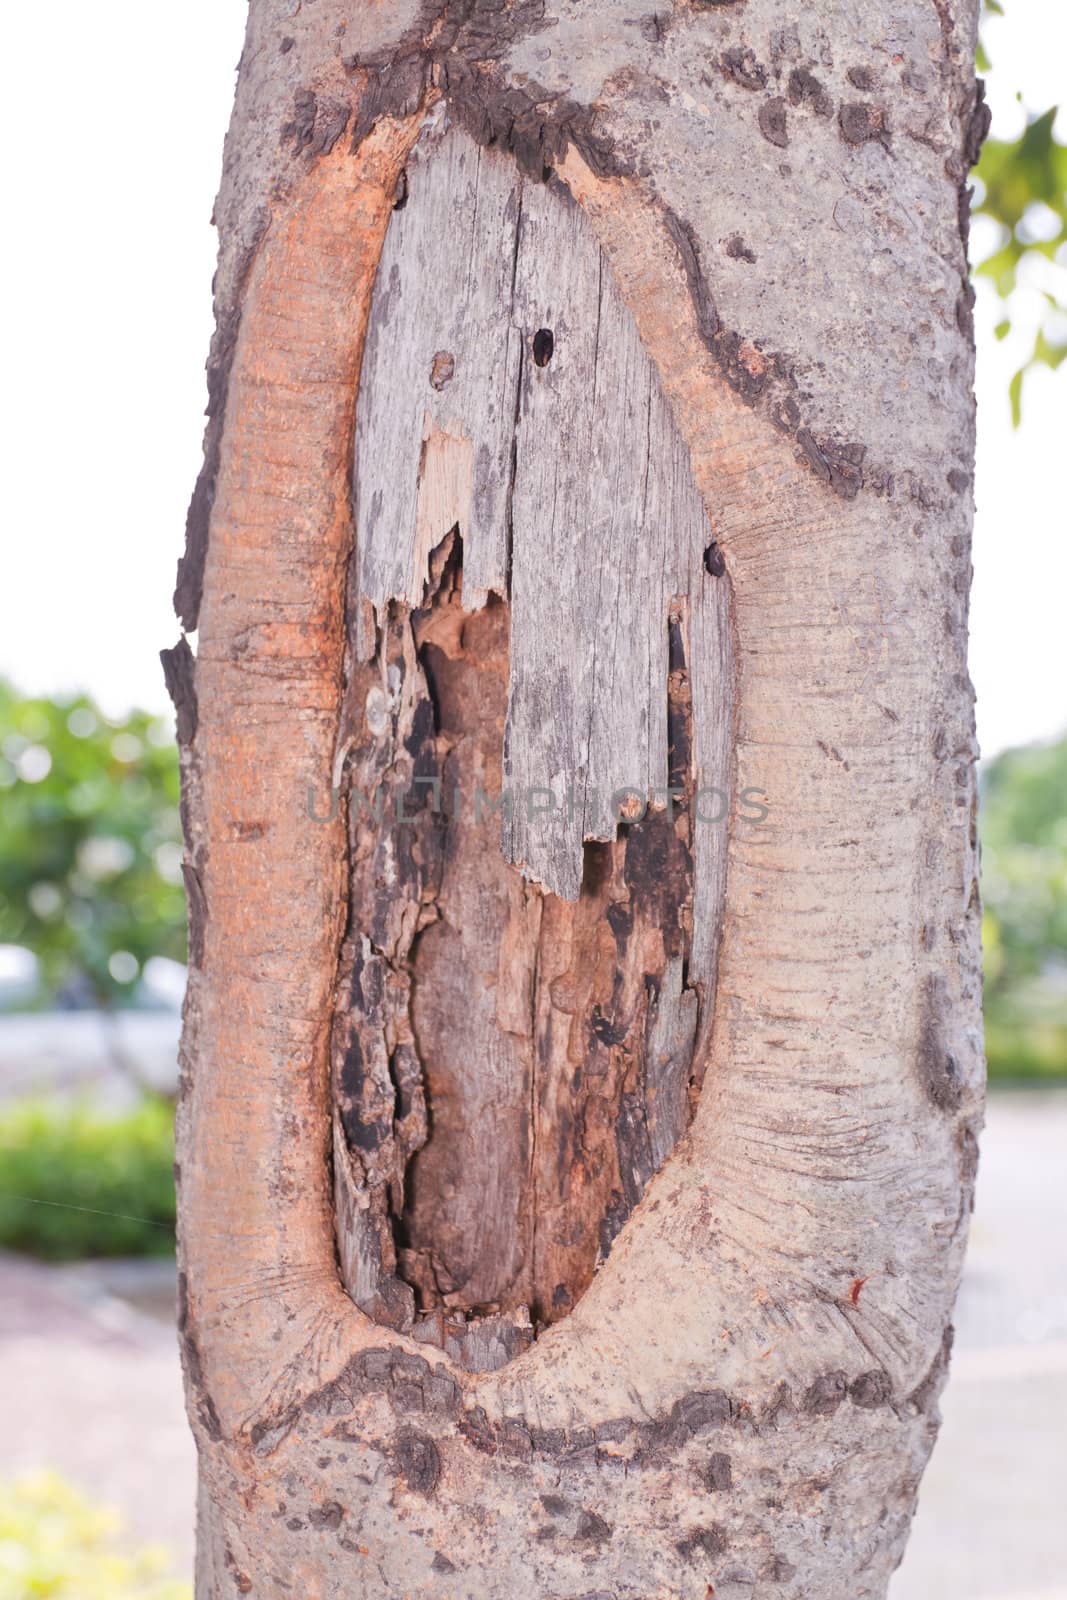 Tree bark, dry parts of the tree. by nikky1972